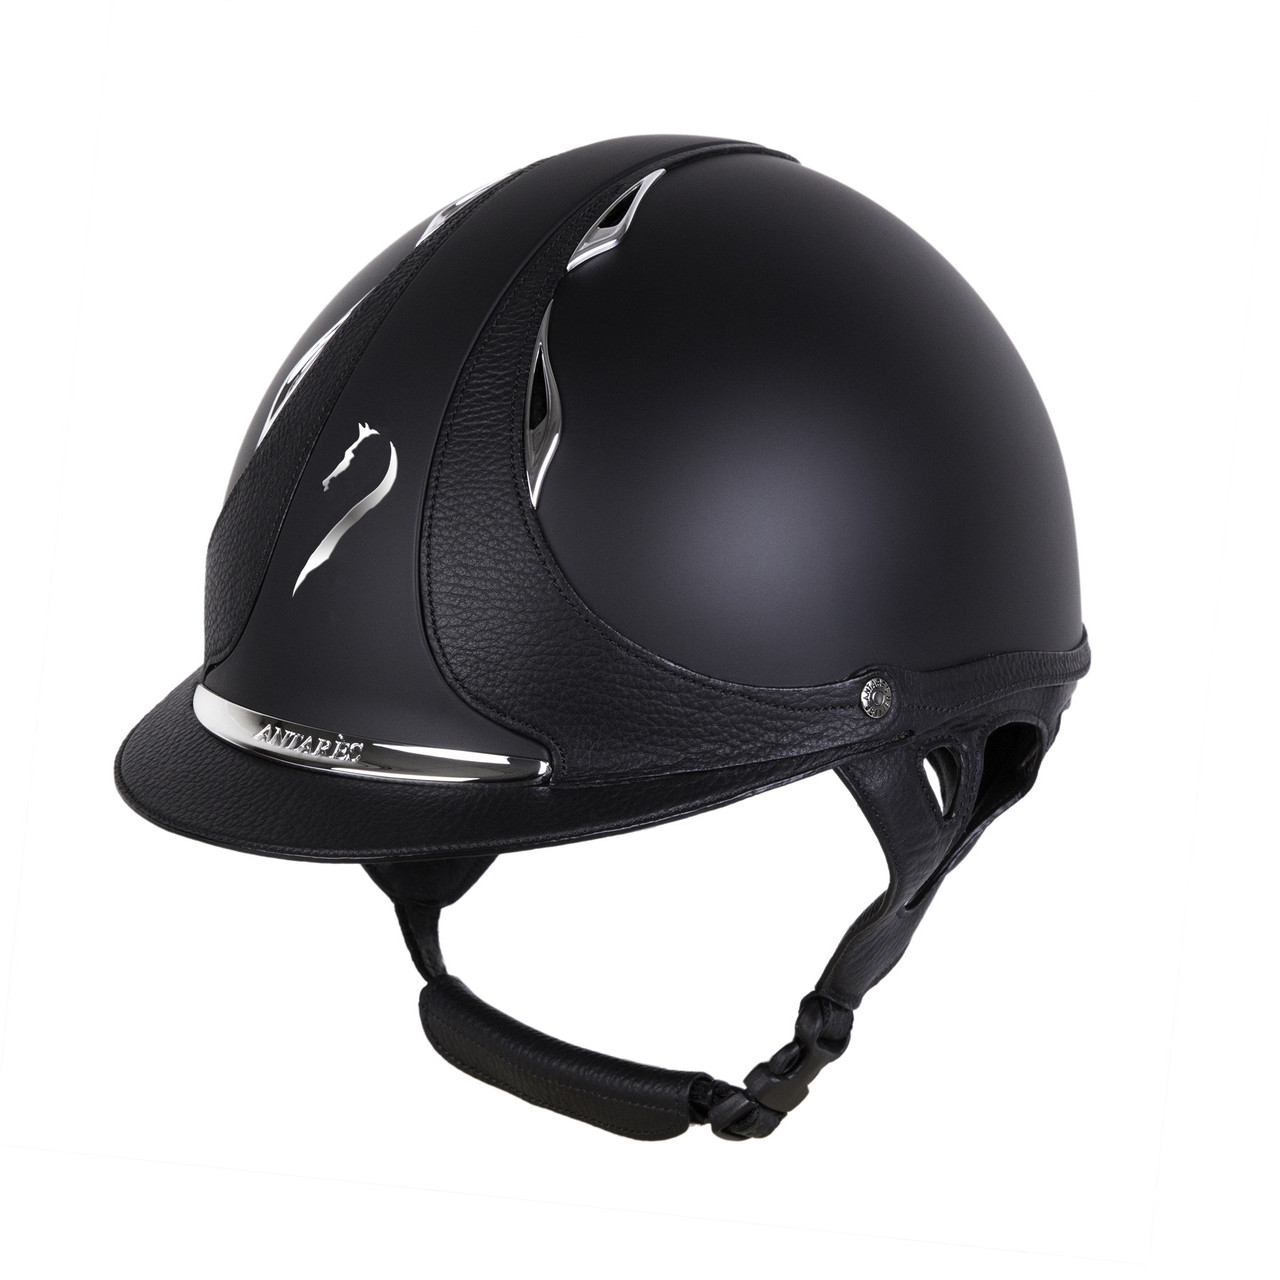 Antares Galaxy Helmet- Equestrian Riding Helmets